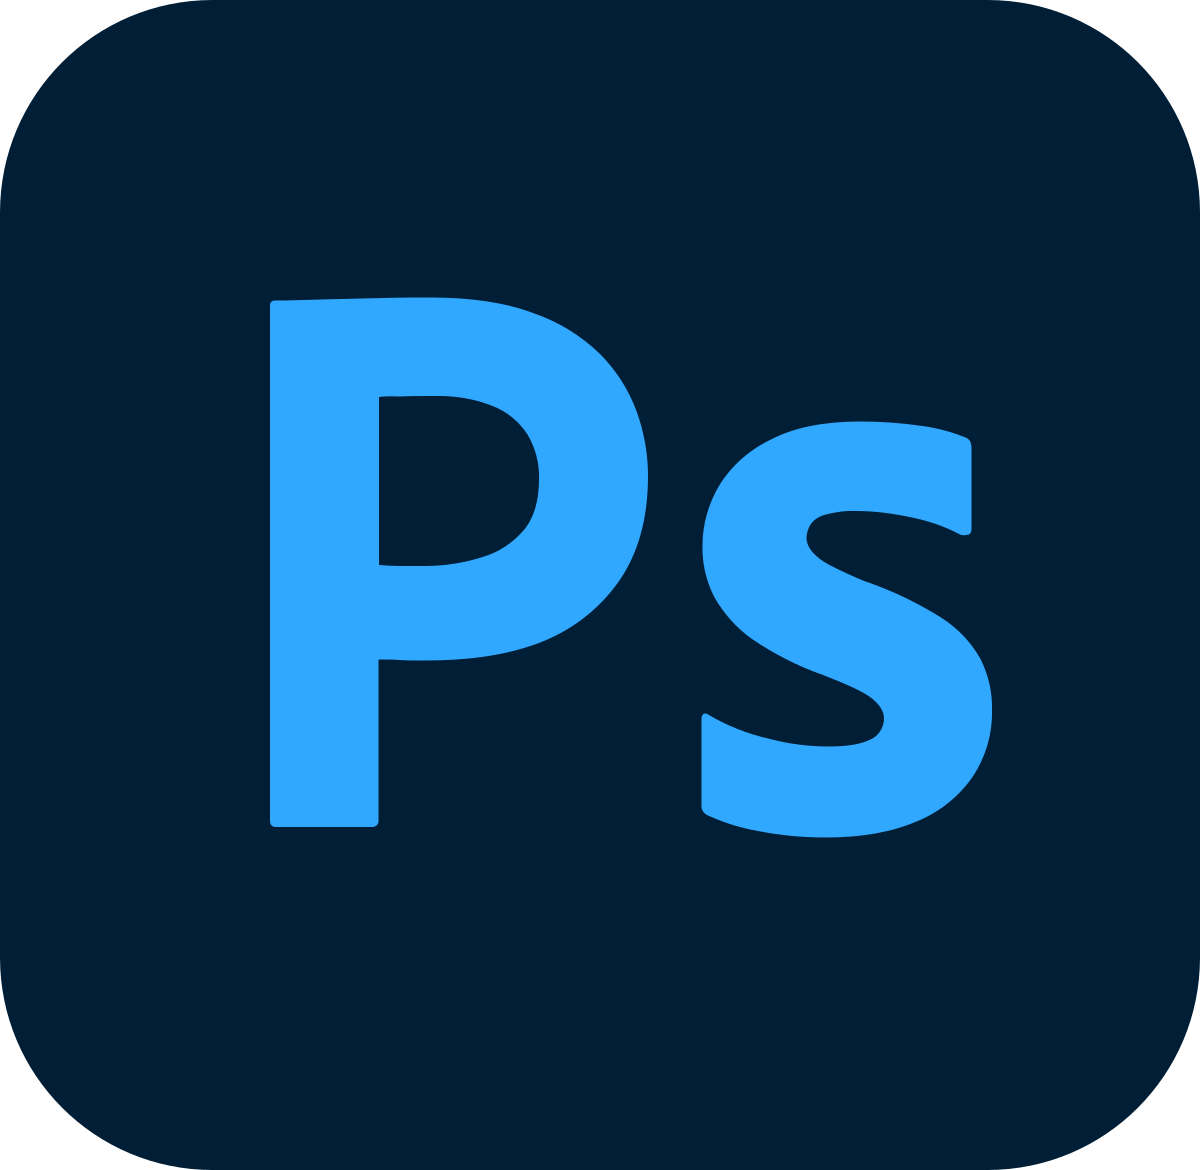 Adobe Photoshop] 2021 포토샵 포터블 버전 무료 다운로드 | Adobe Photoshop 2021 Version Free  Download Portable